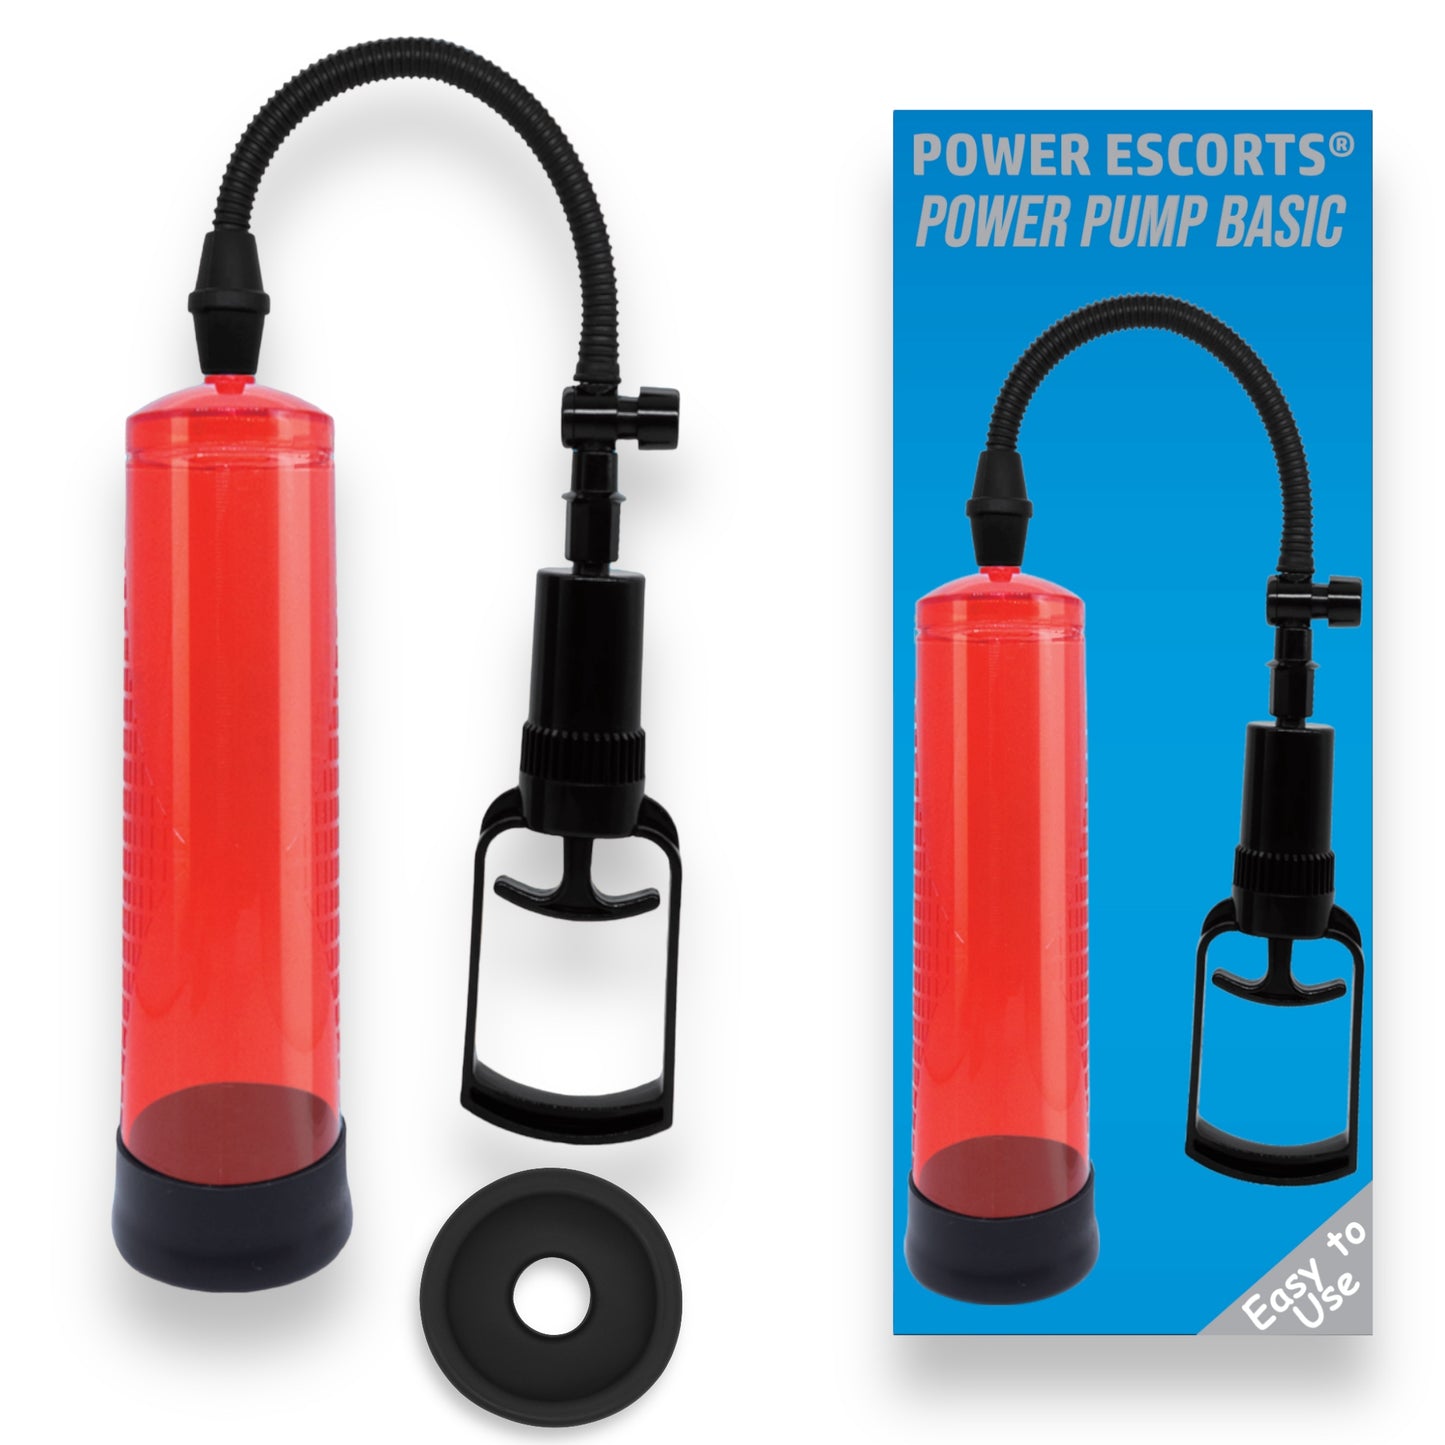 Power Escorts - BR170 Red - Power Pump Basic - Penis Pump